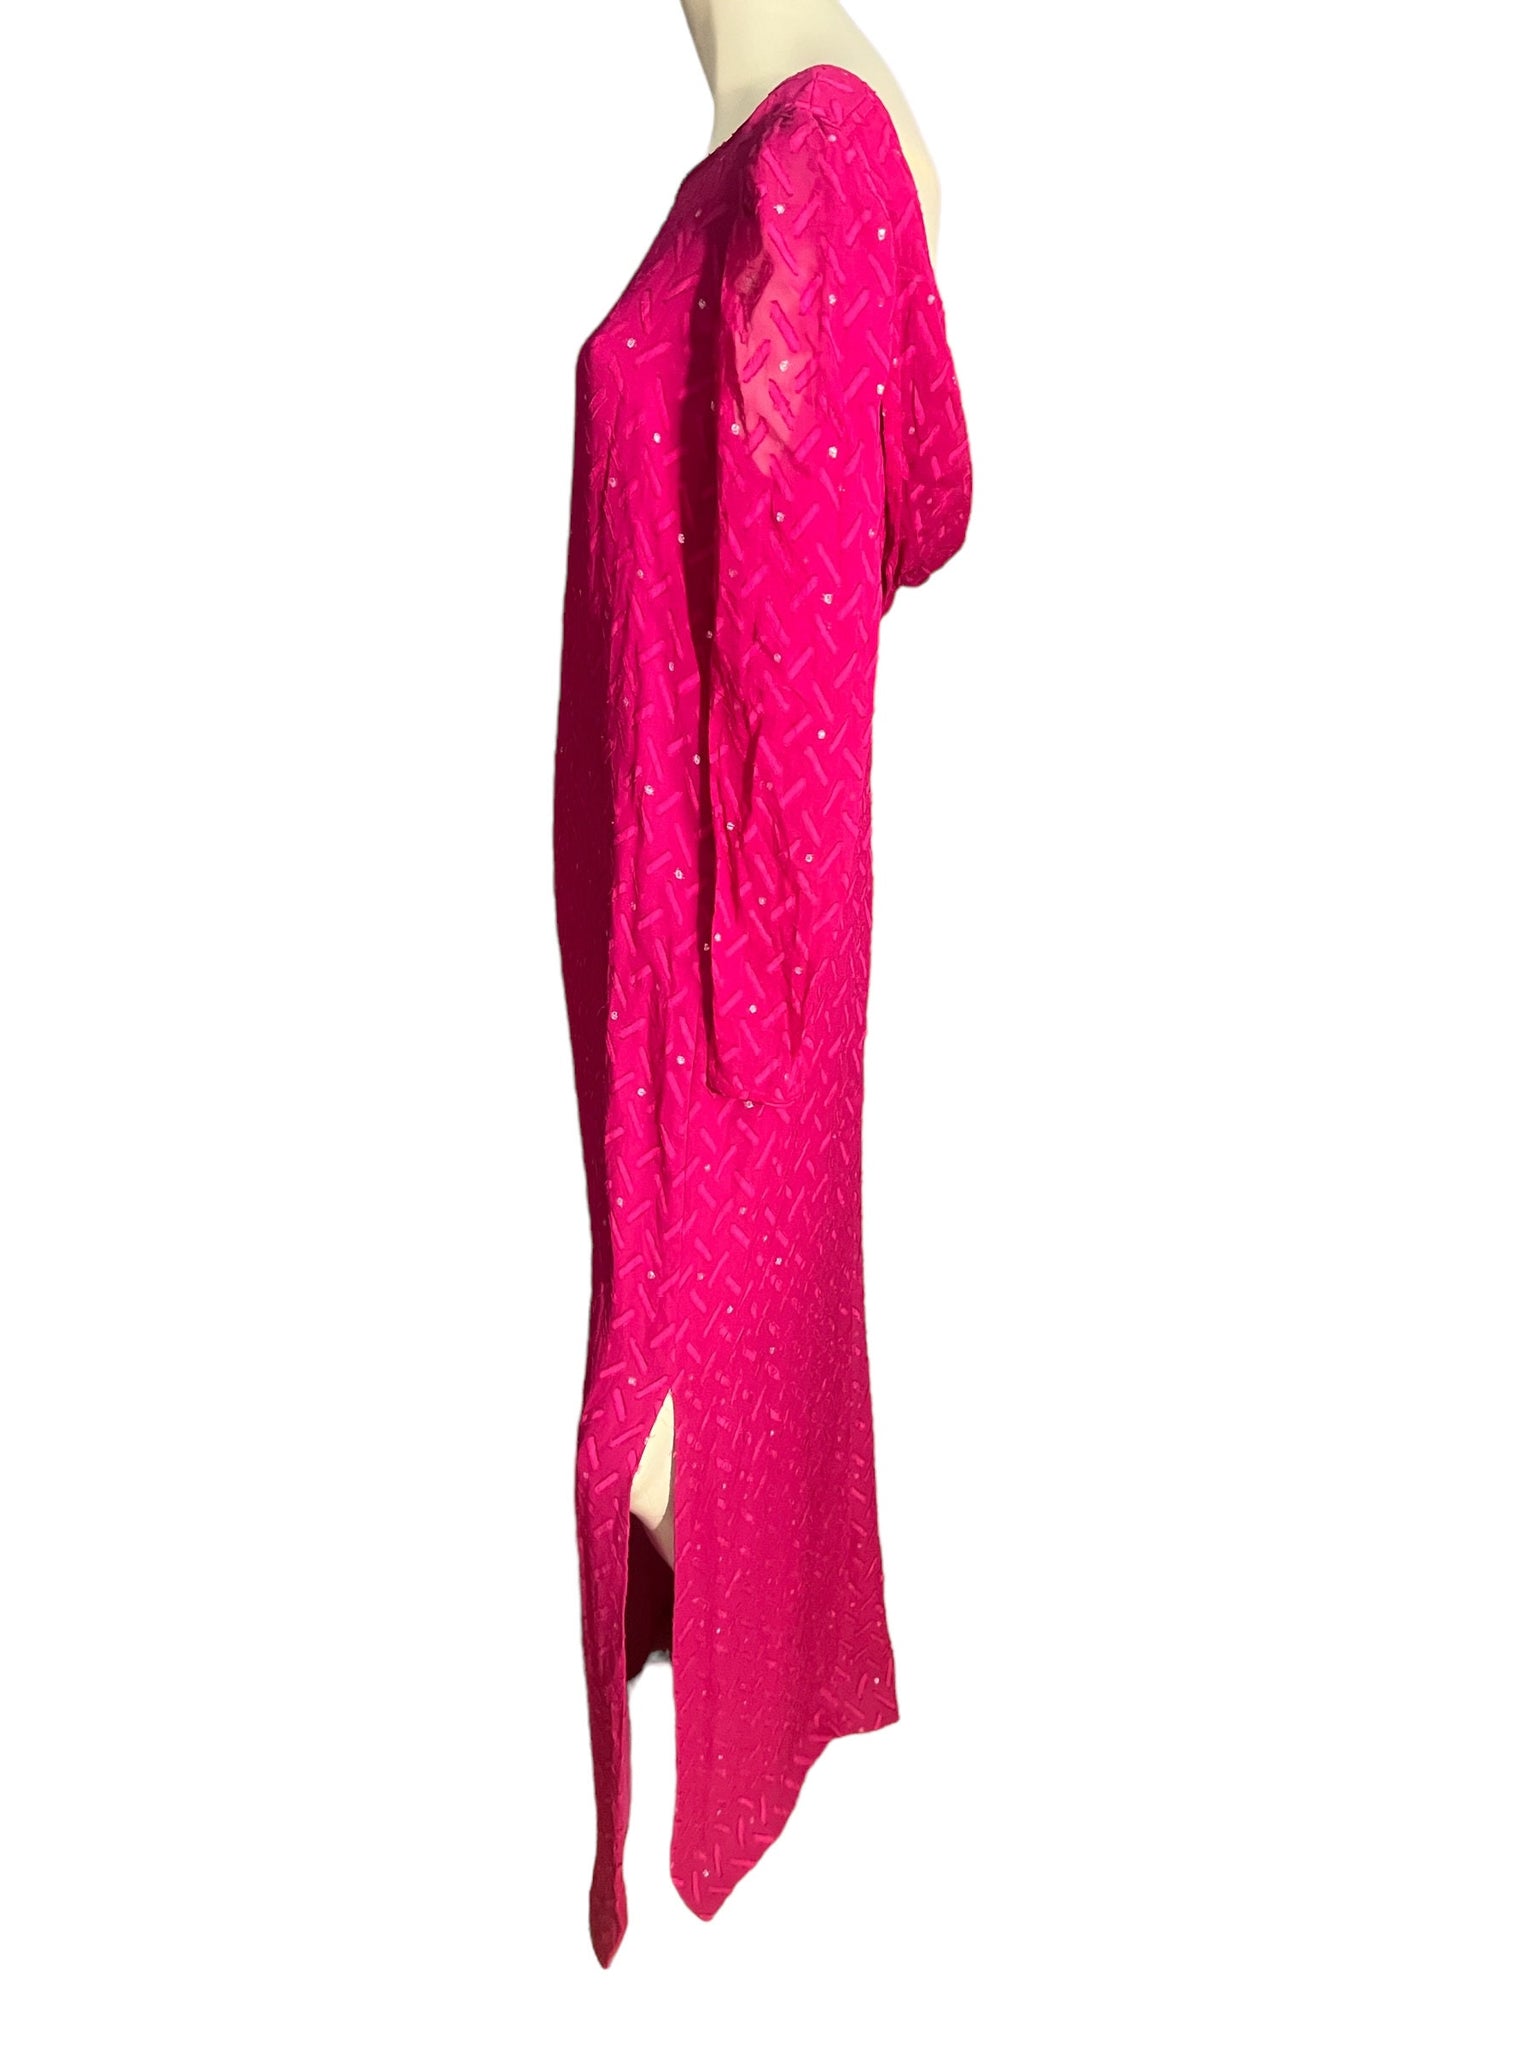 Vintage 80's Victor Costa pink long dress 16